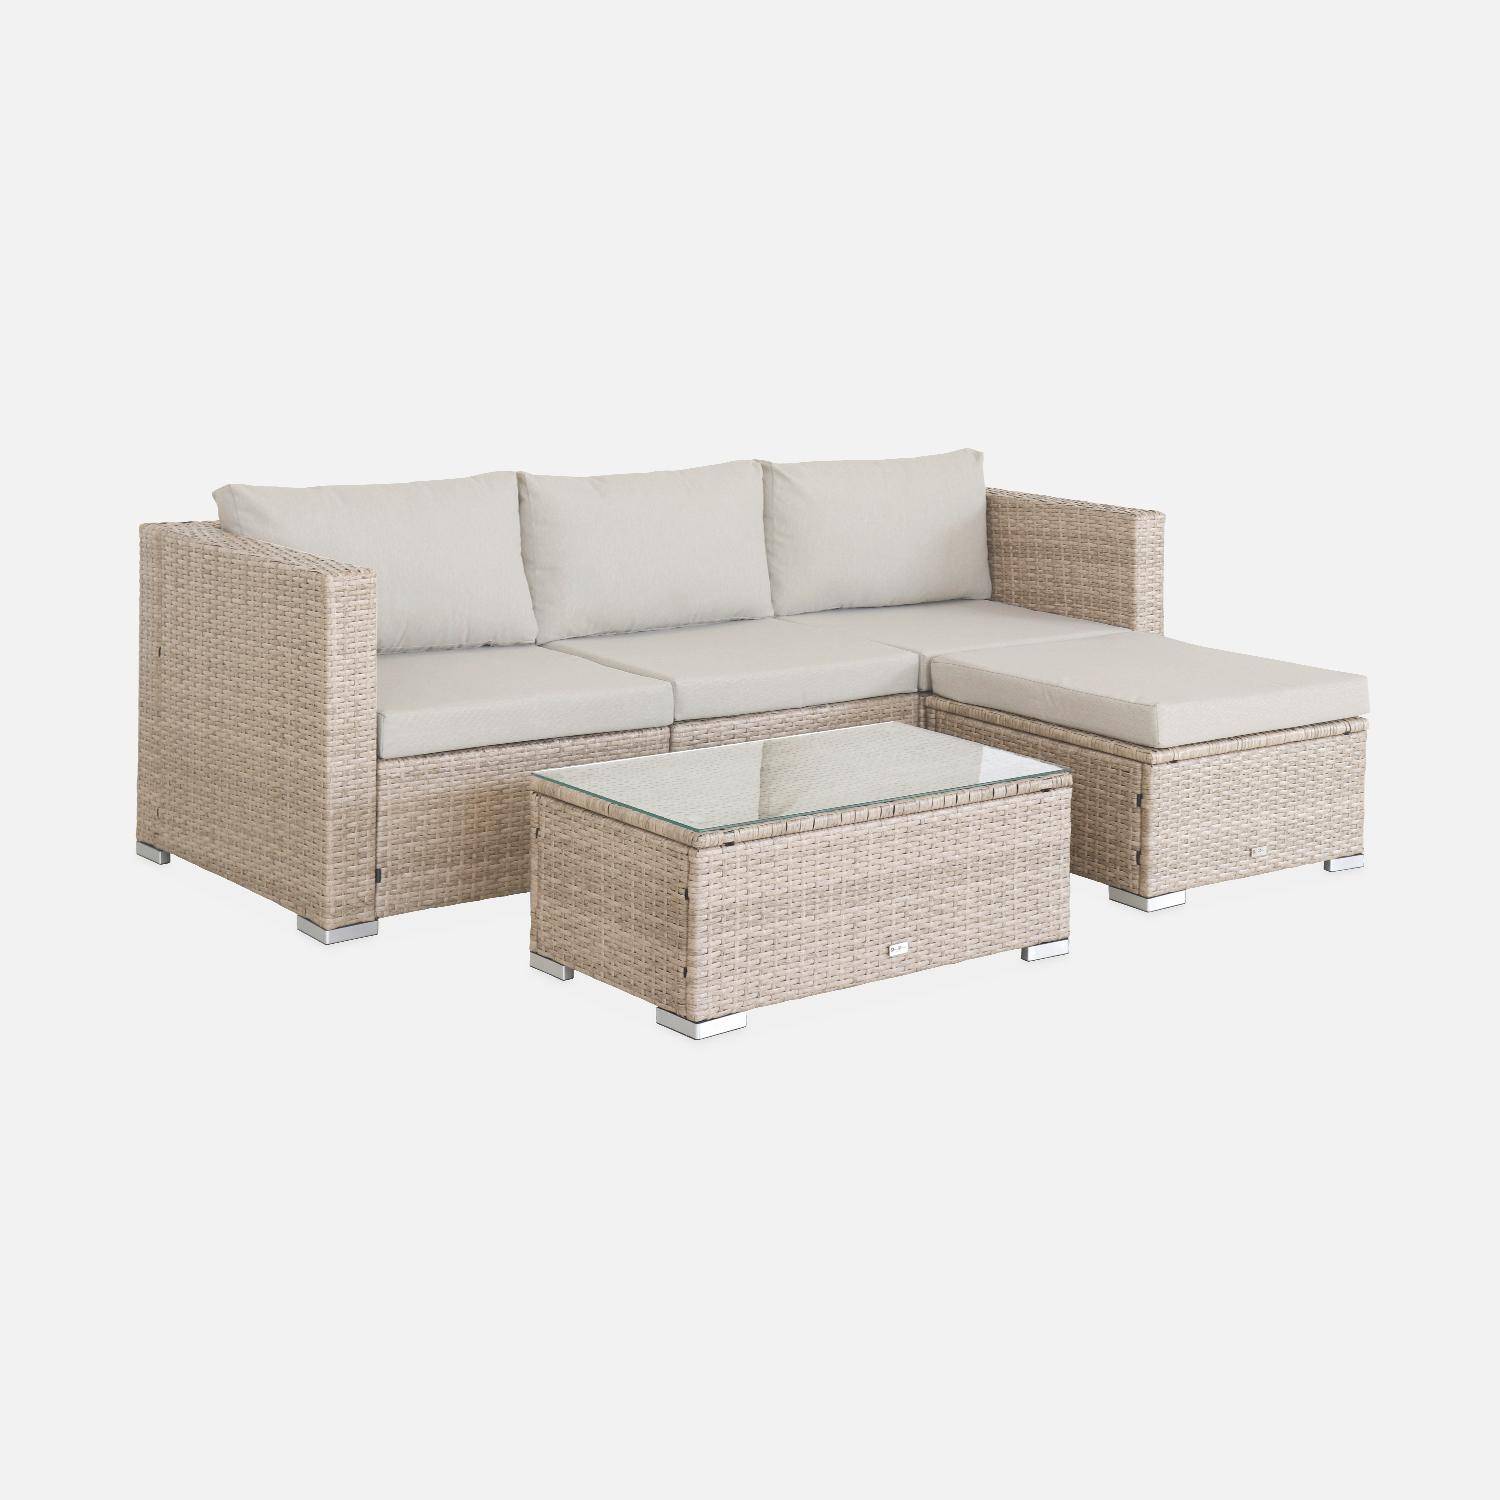 4-seater rattan garden sofa set - sofa, footrest, coffee table - Torino - Beige,sweeek,Photo3